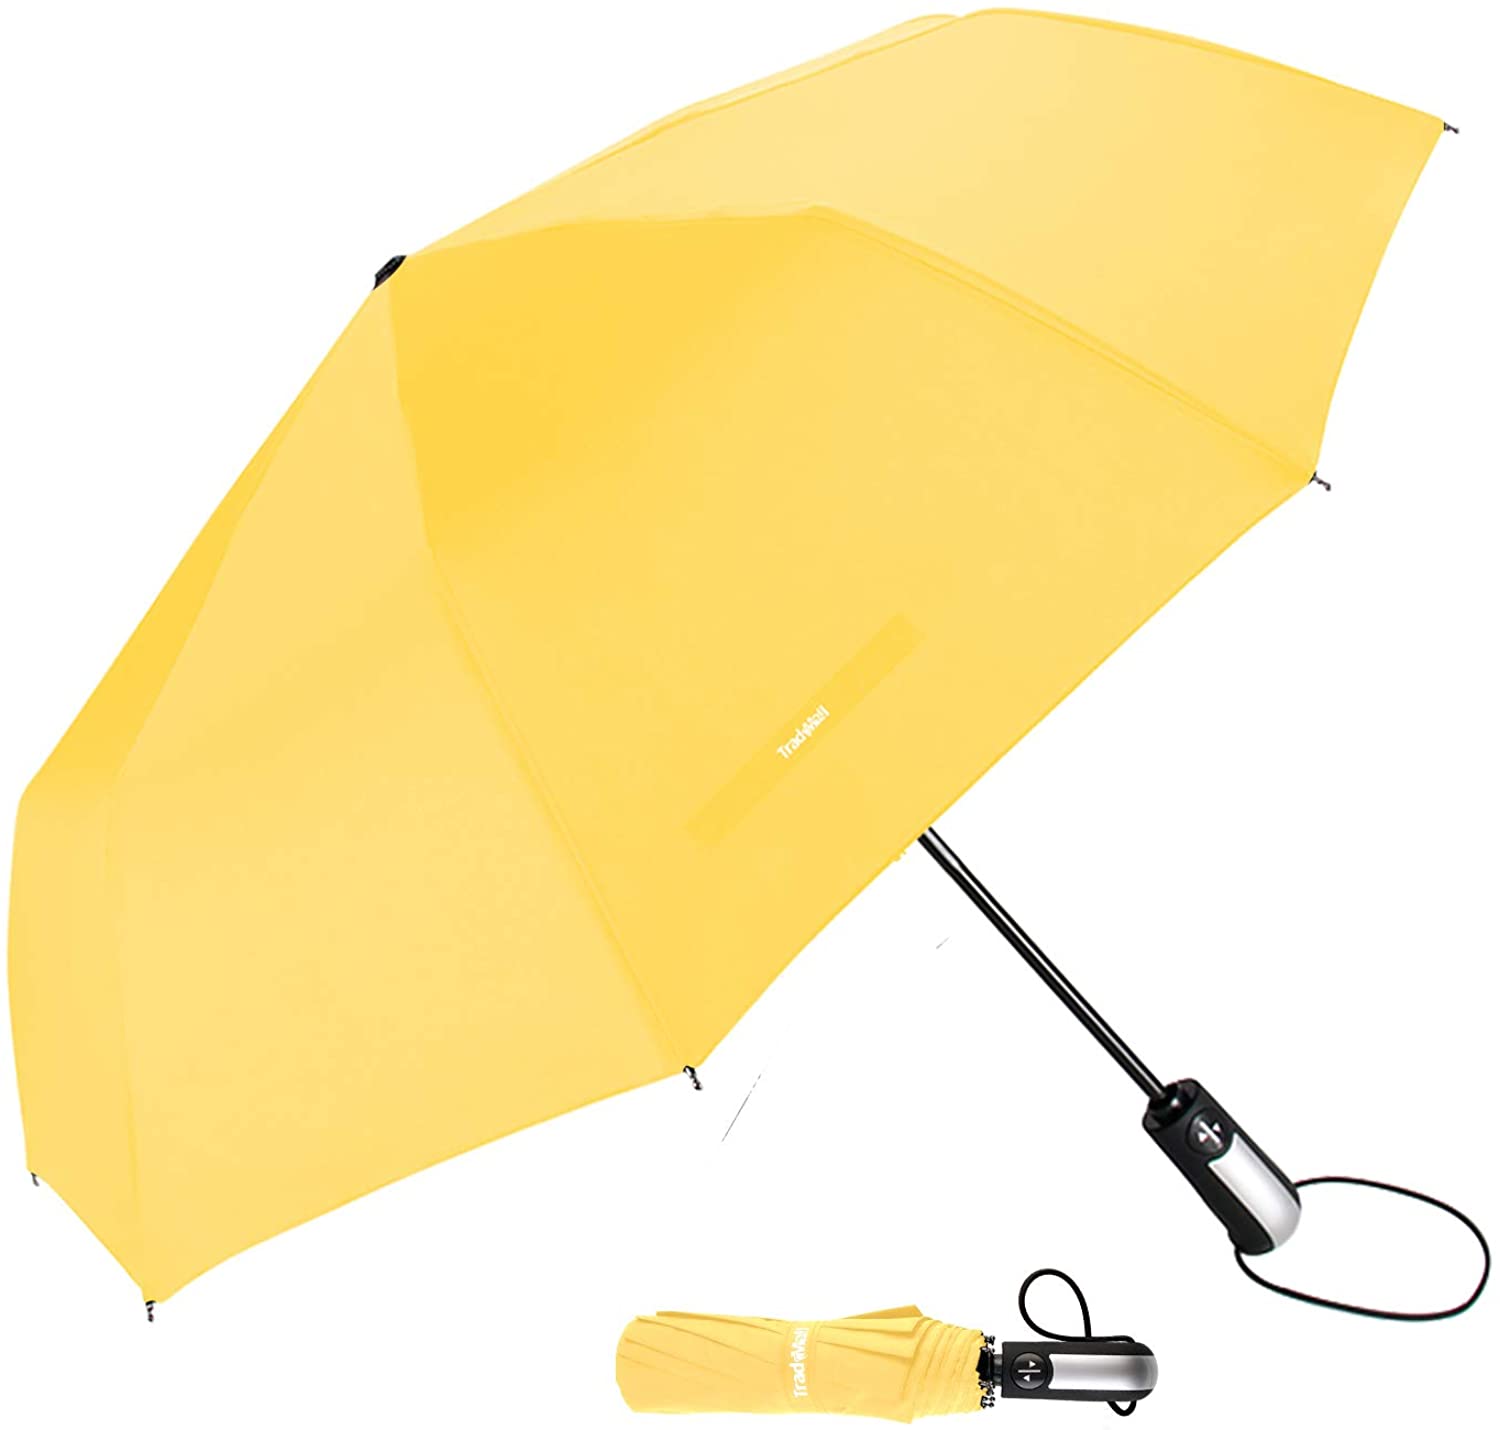 TradMall Travel Umbrella Windproof with Reinforced Fiberglass Ribs Large Canopy Ergonomic Handle Auto Open & Close 